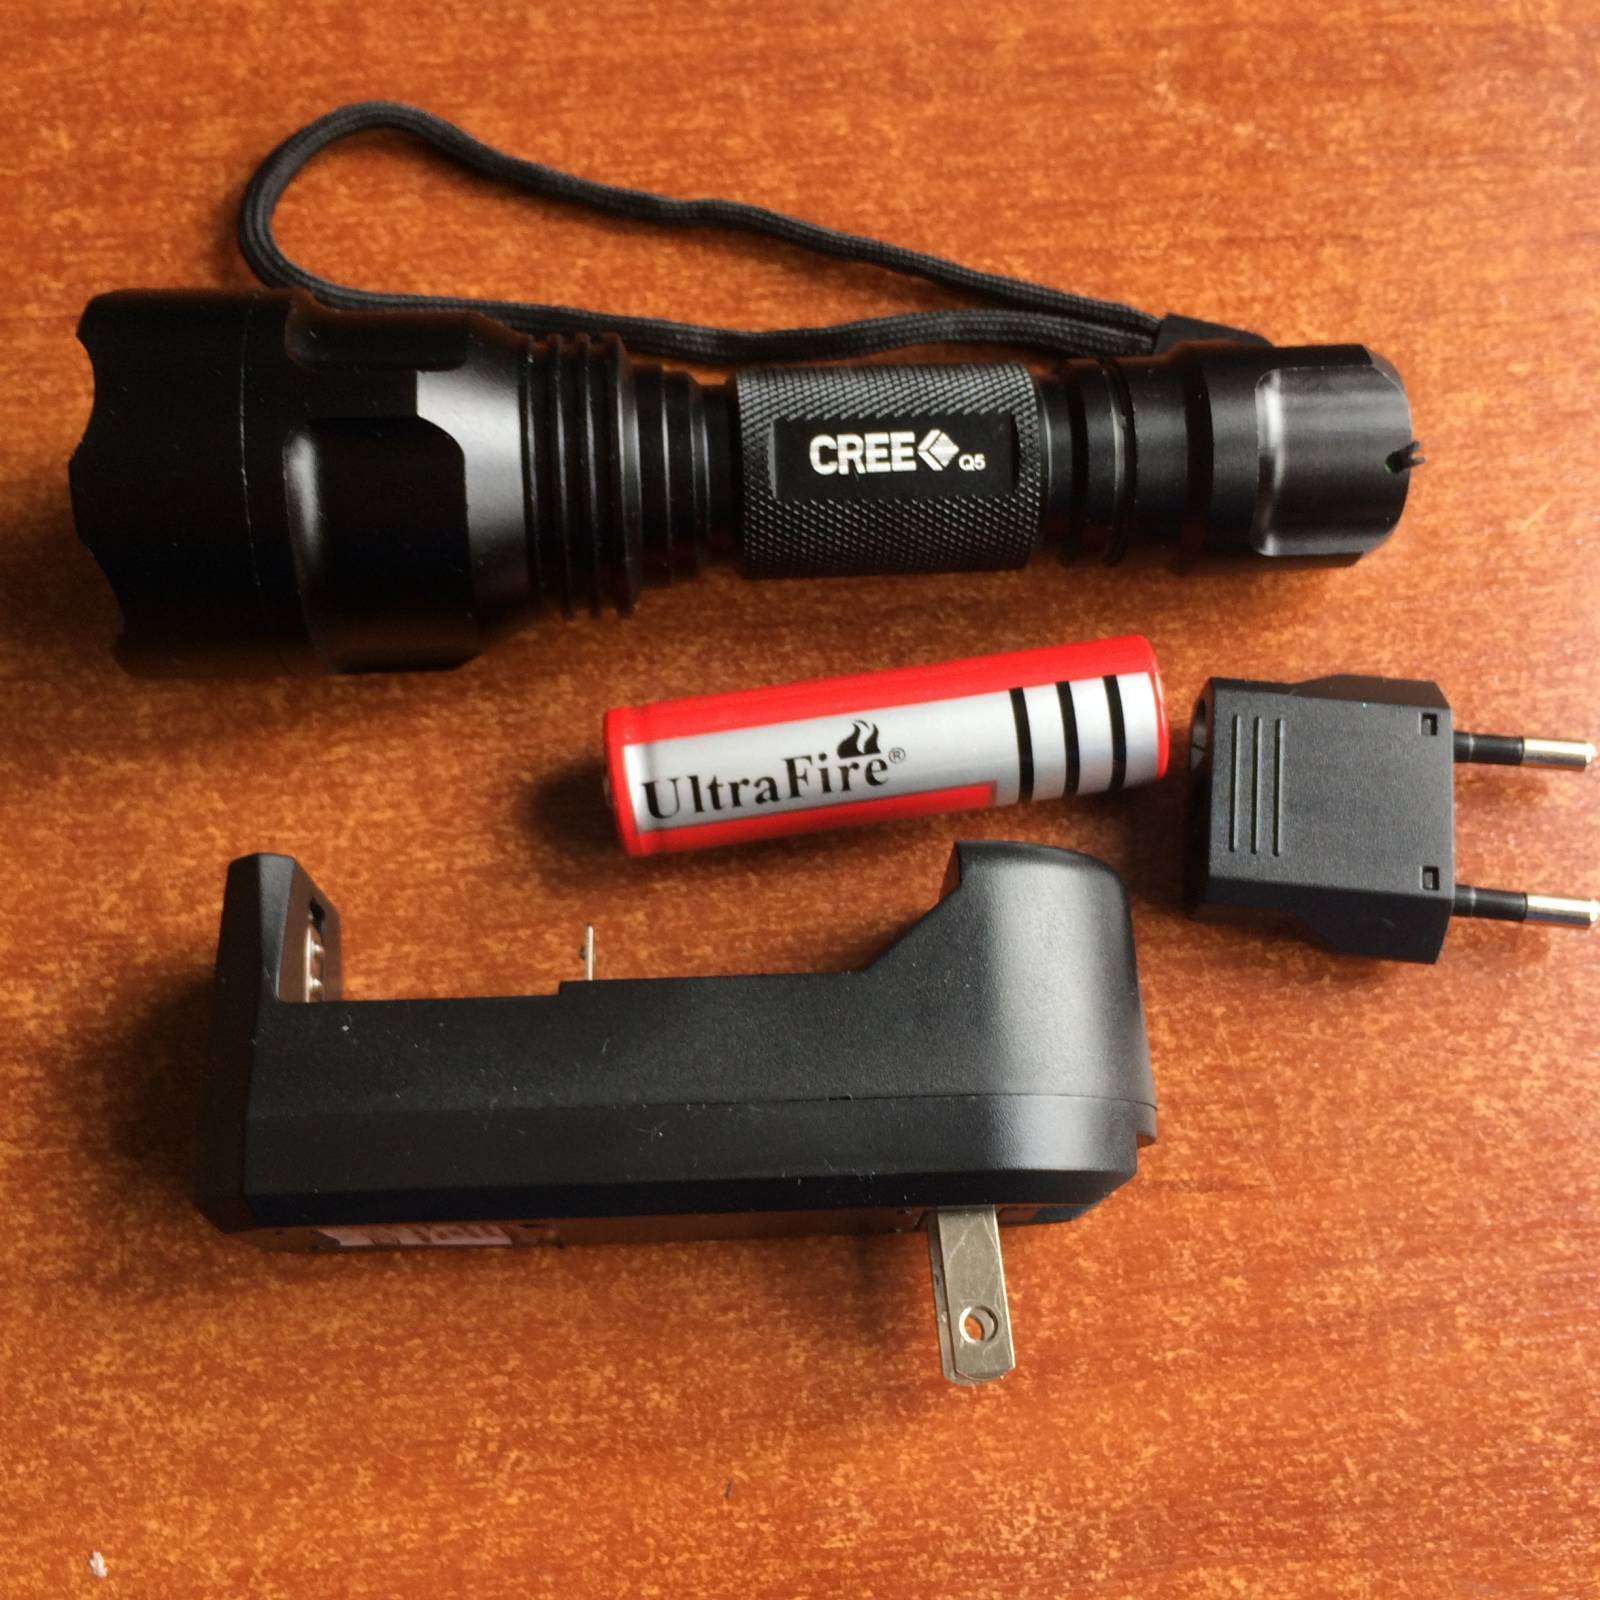 Lightinthebox: UltraFire 5-Mode Cree XR-E Q5 LED Flashlight фонарик за 2,99 стоит ли?